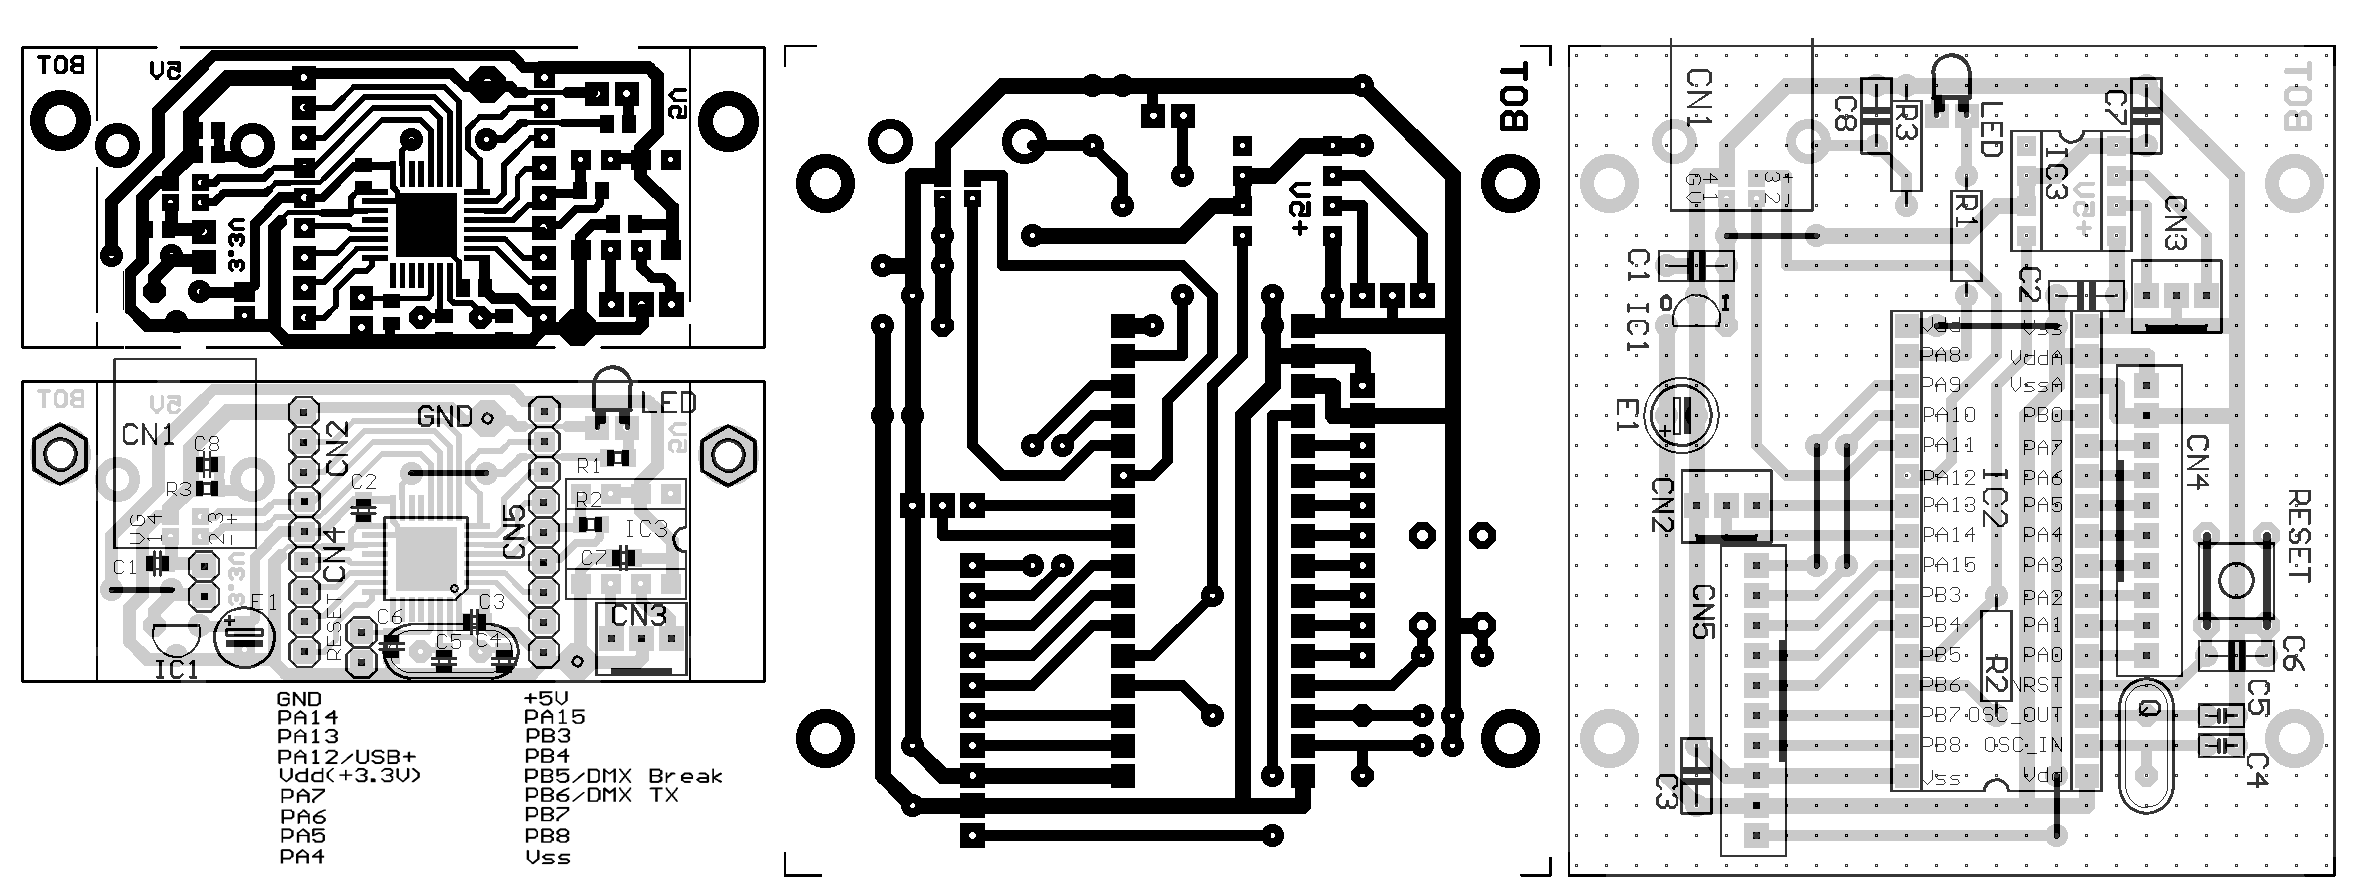 G431 Mini pcb layout drawing